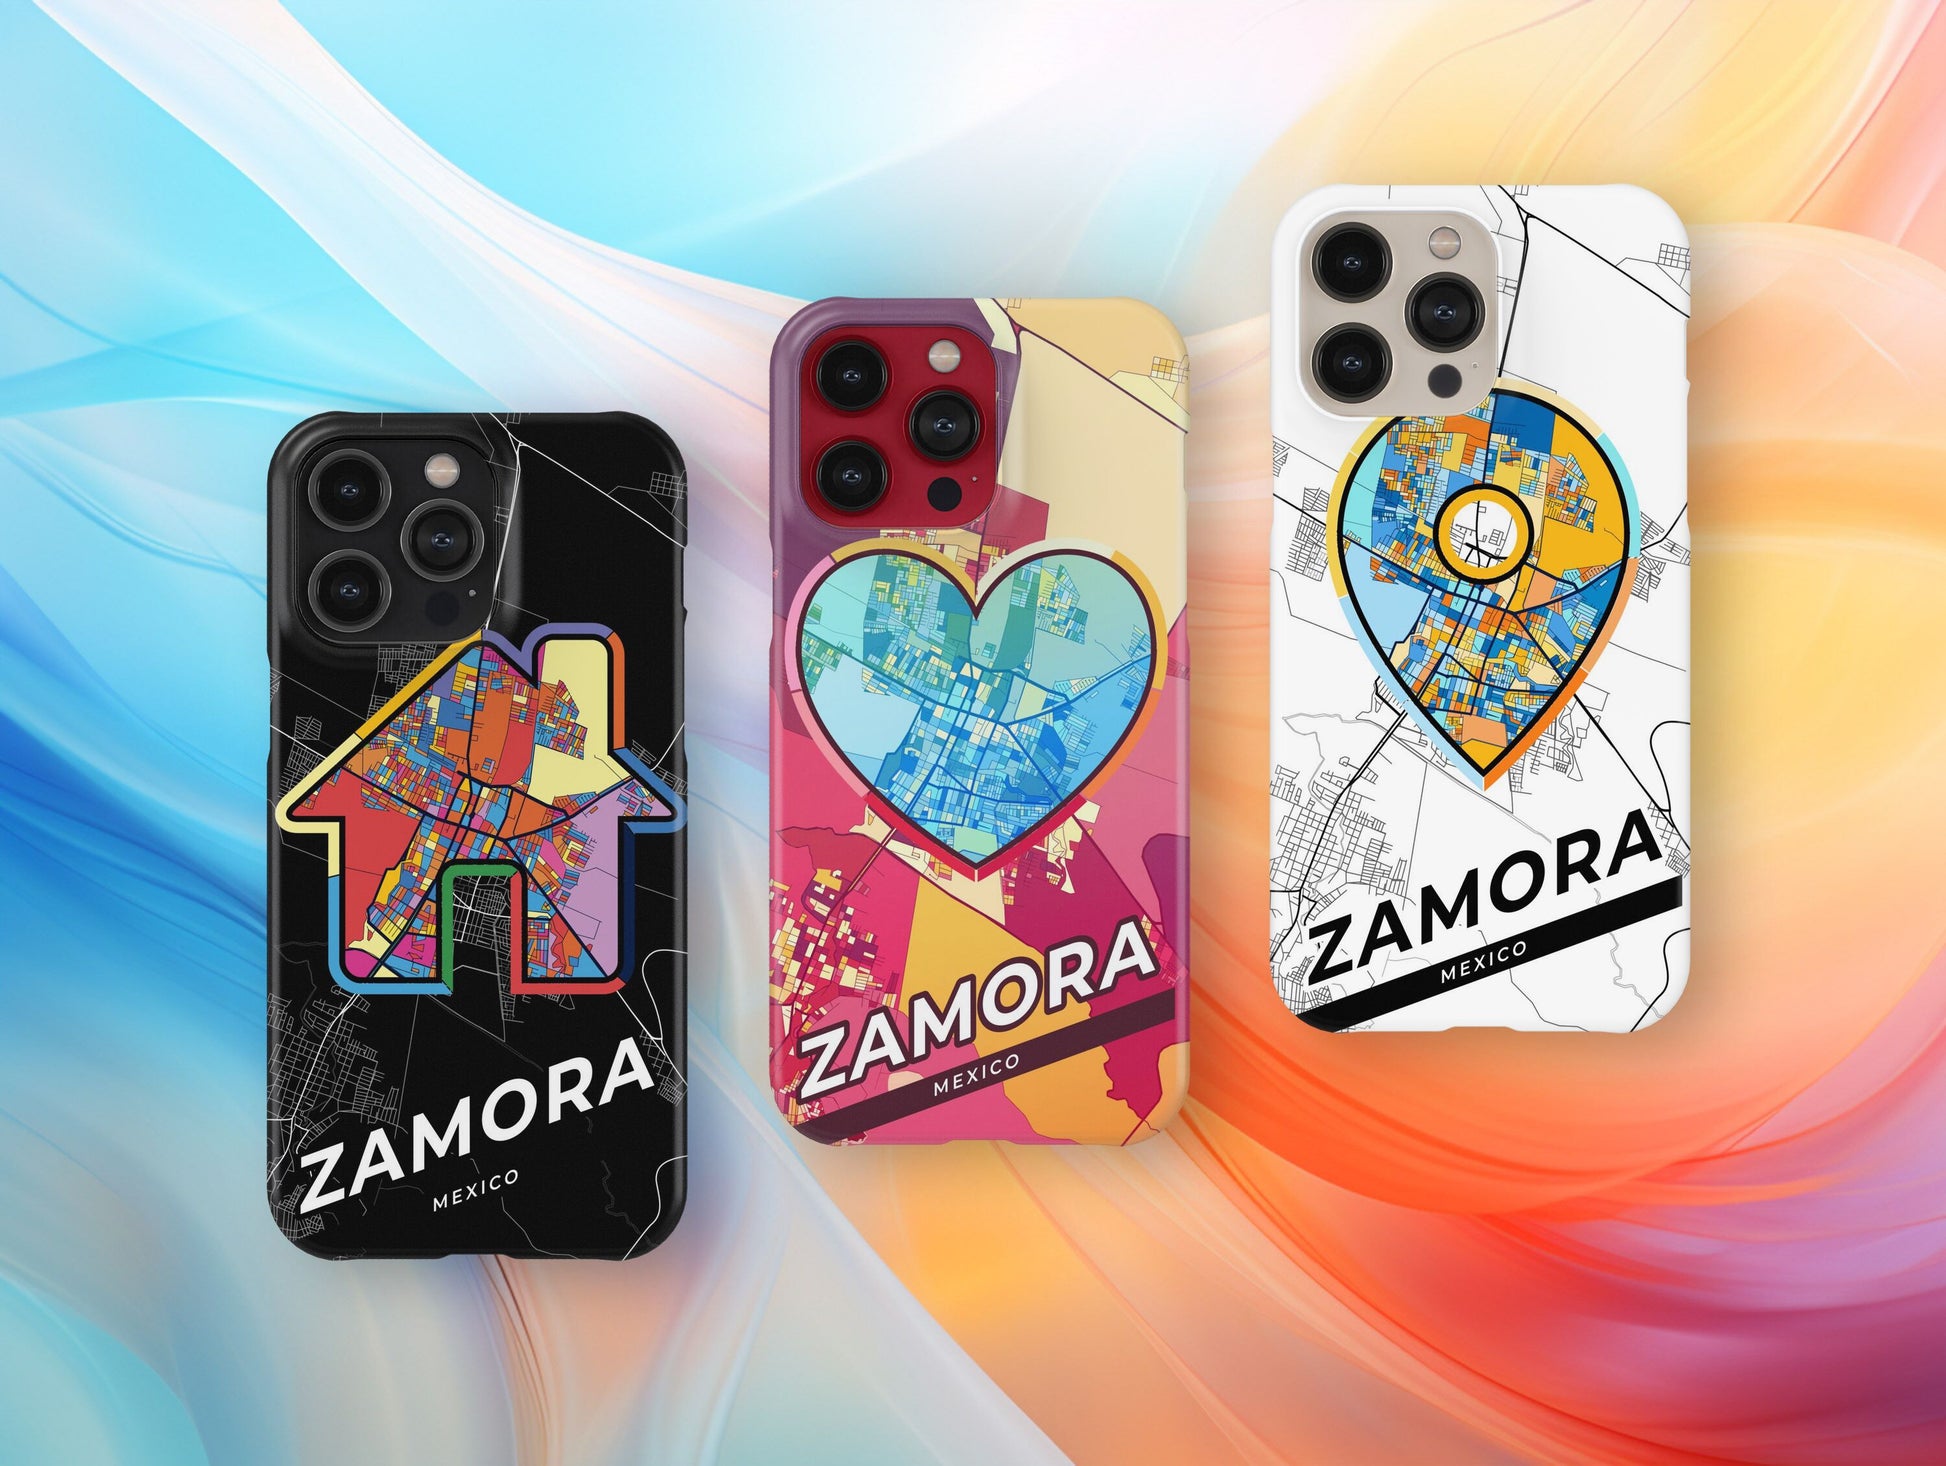 Zamora Mexico slim phone case with colorful icon